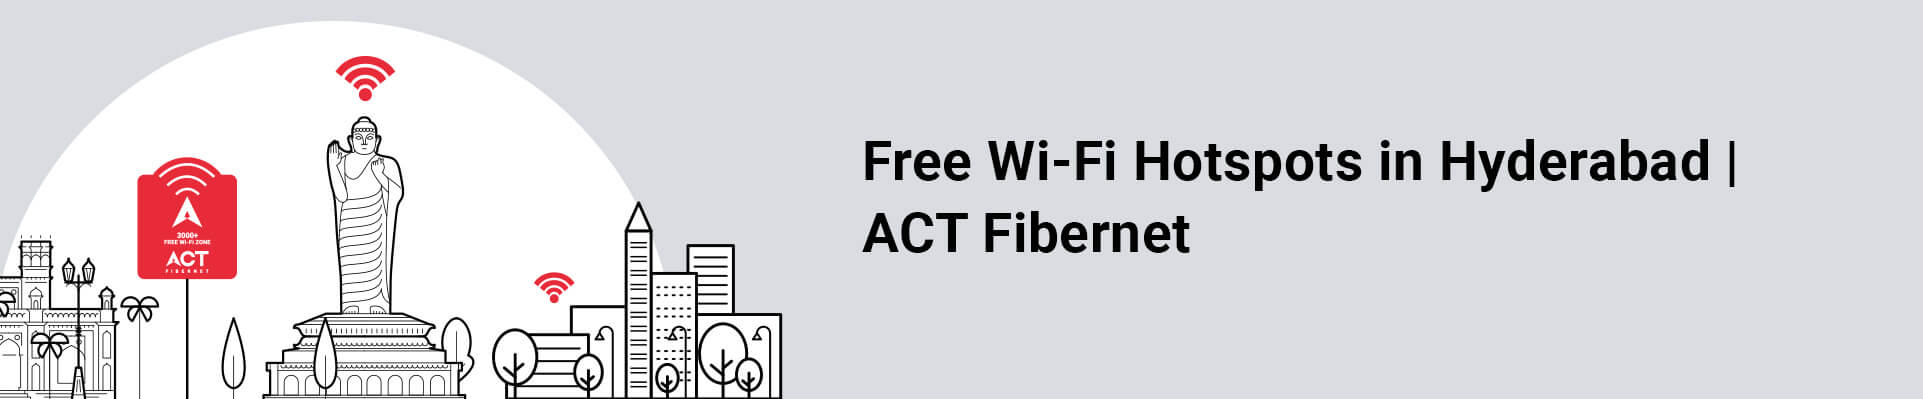 Free Wi-Fi Hotspots in Hyderabad